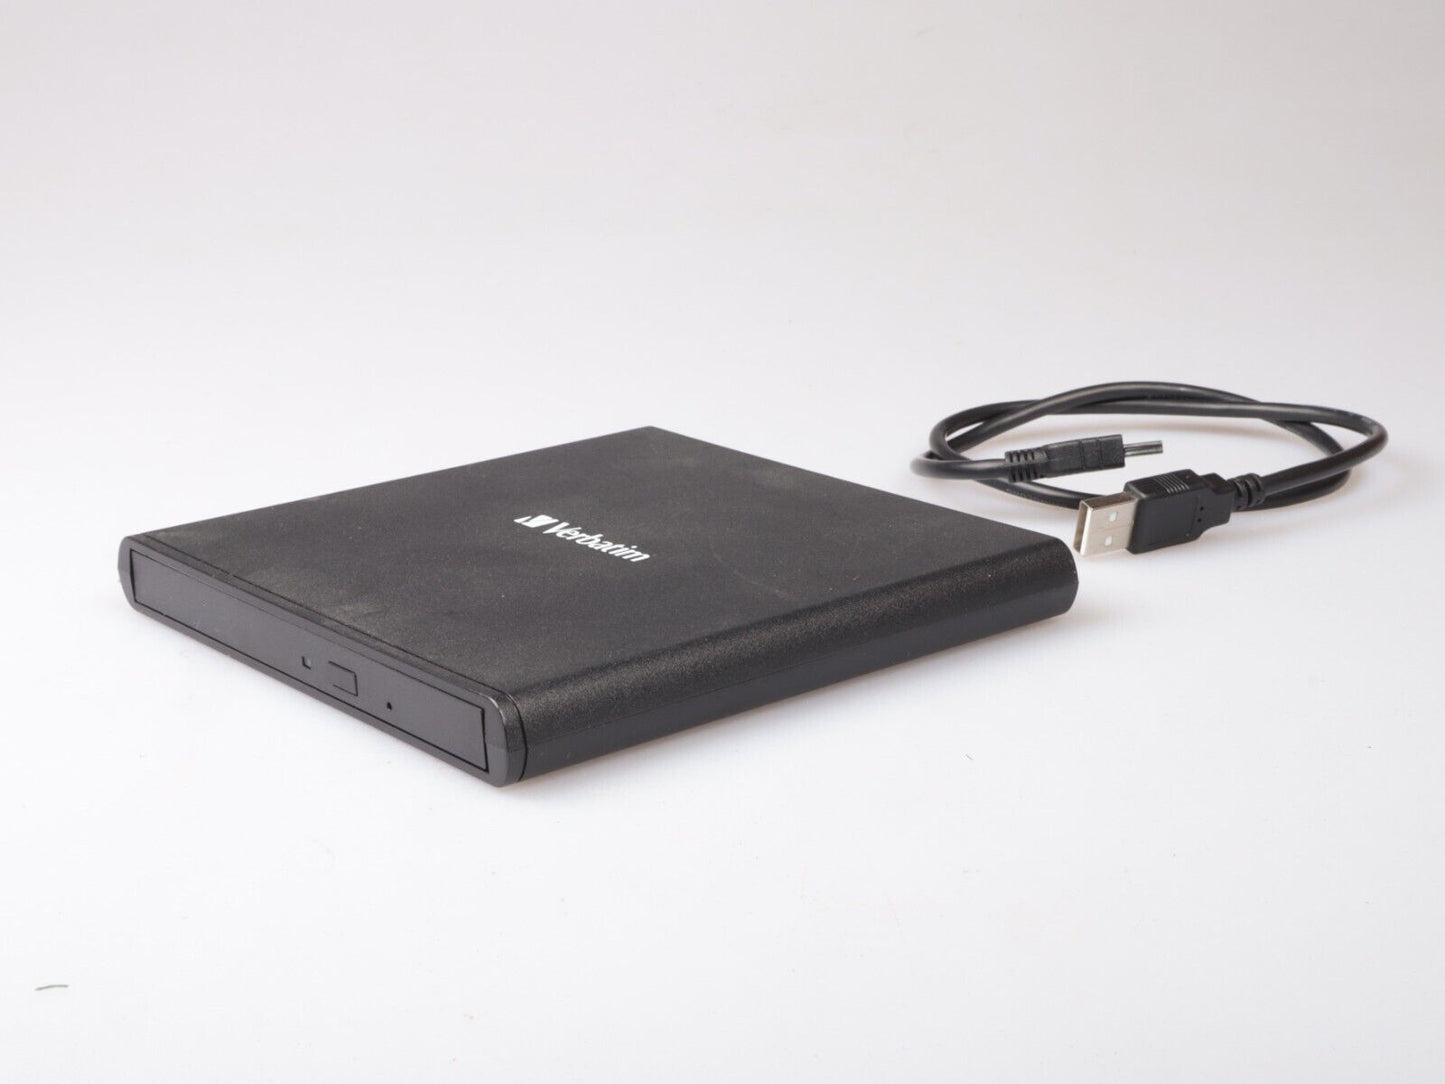 VERBATIM mobile DVD rewriter | USB 2.0 | Black